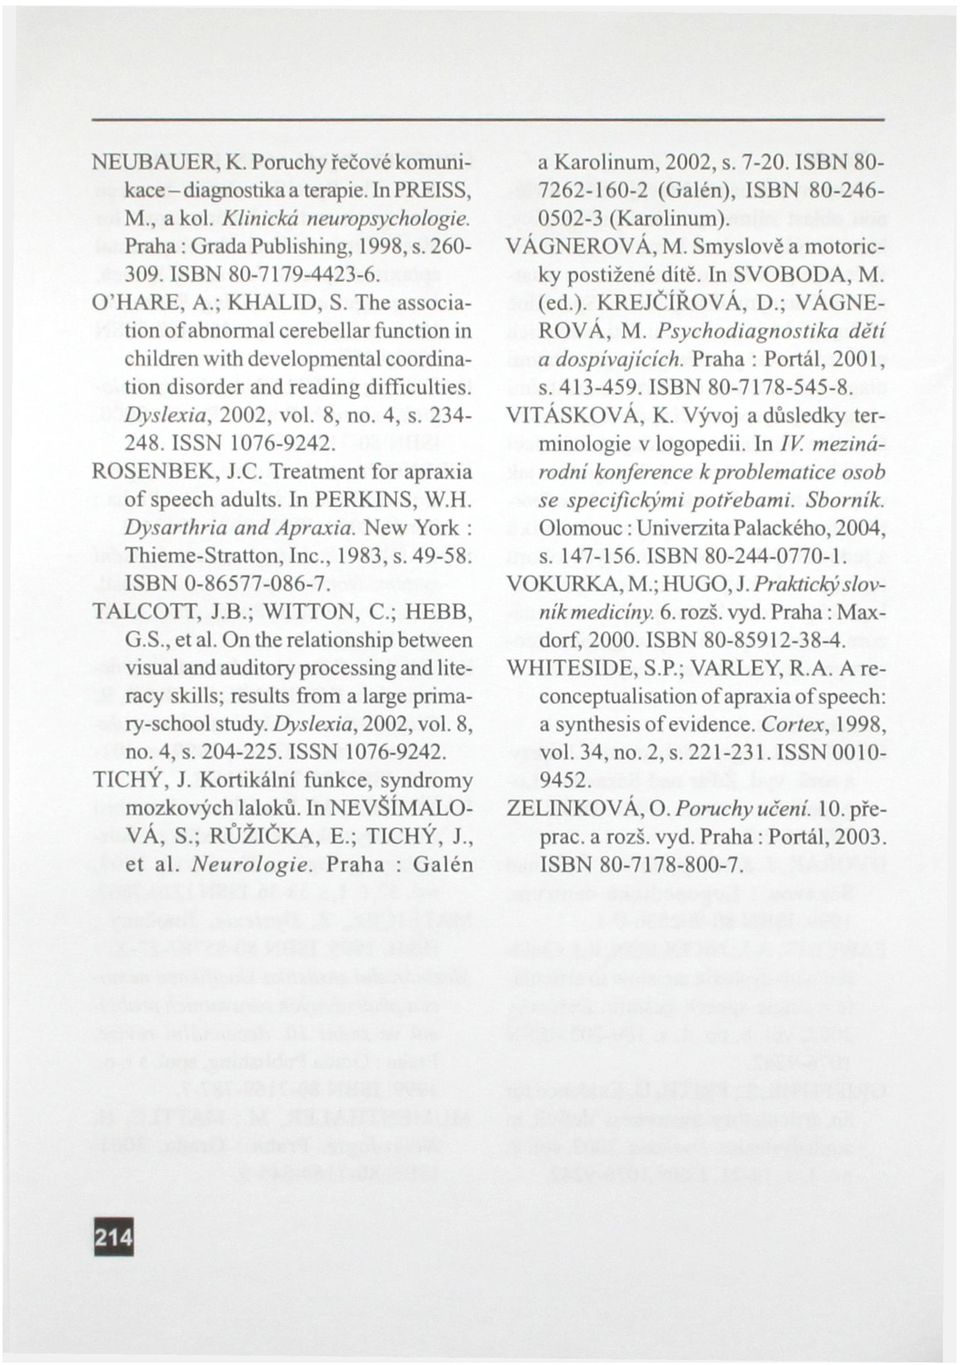 Treatment for apraxia of speech adults. In PERKJNS, W.H. Dysarthria and Apraxia. New York : Thieme-Stratton, Inc., 1983, s. 49-58. ISBN 0-86577-086-7. TALCOTT, J.B.; WITTON, C.; HEBB, G.S., et al.